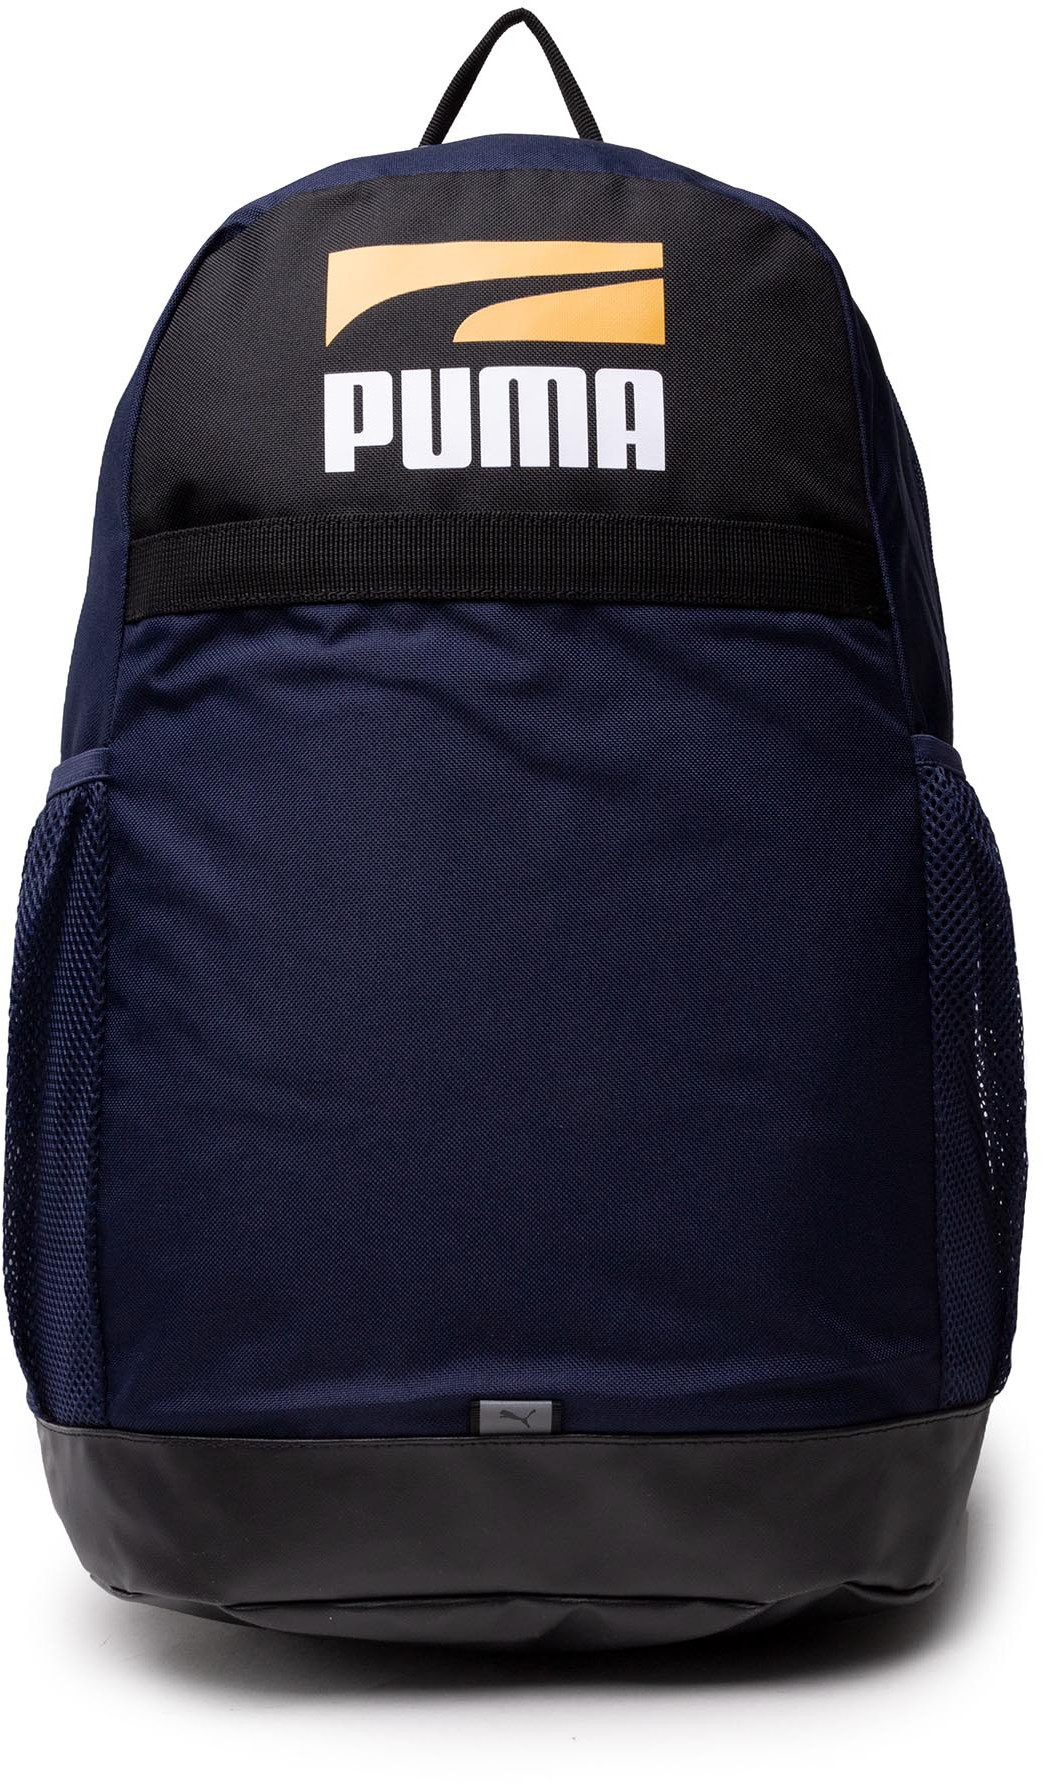 Puma Plecak Plus Backpack II 078391 02 Peacoat